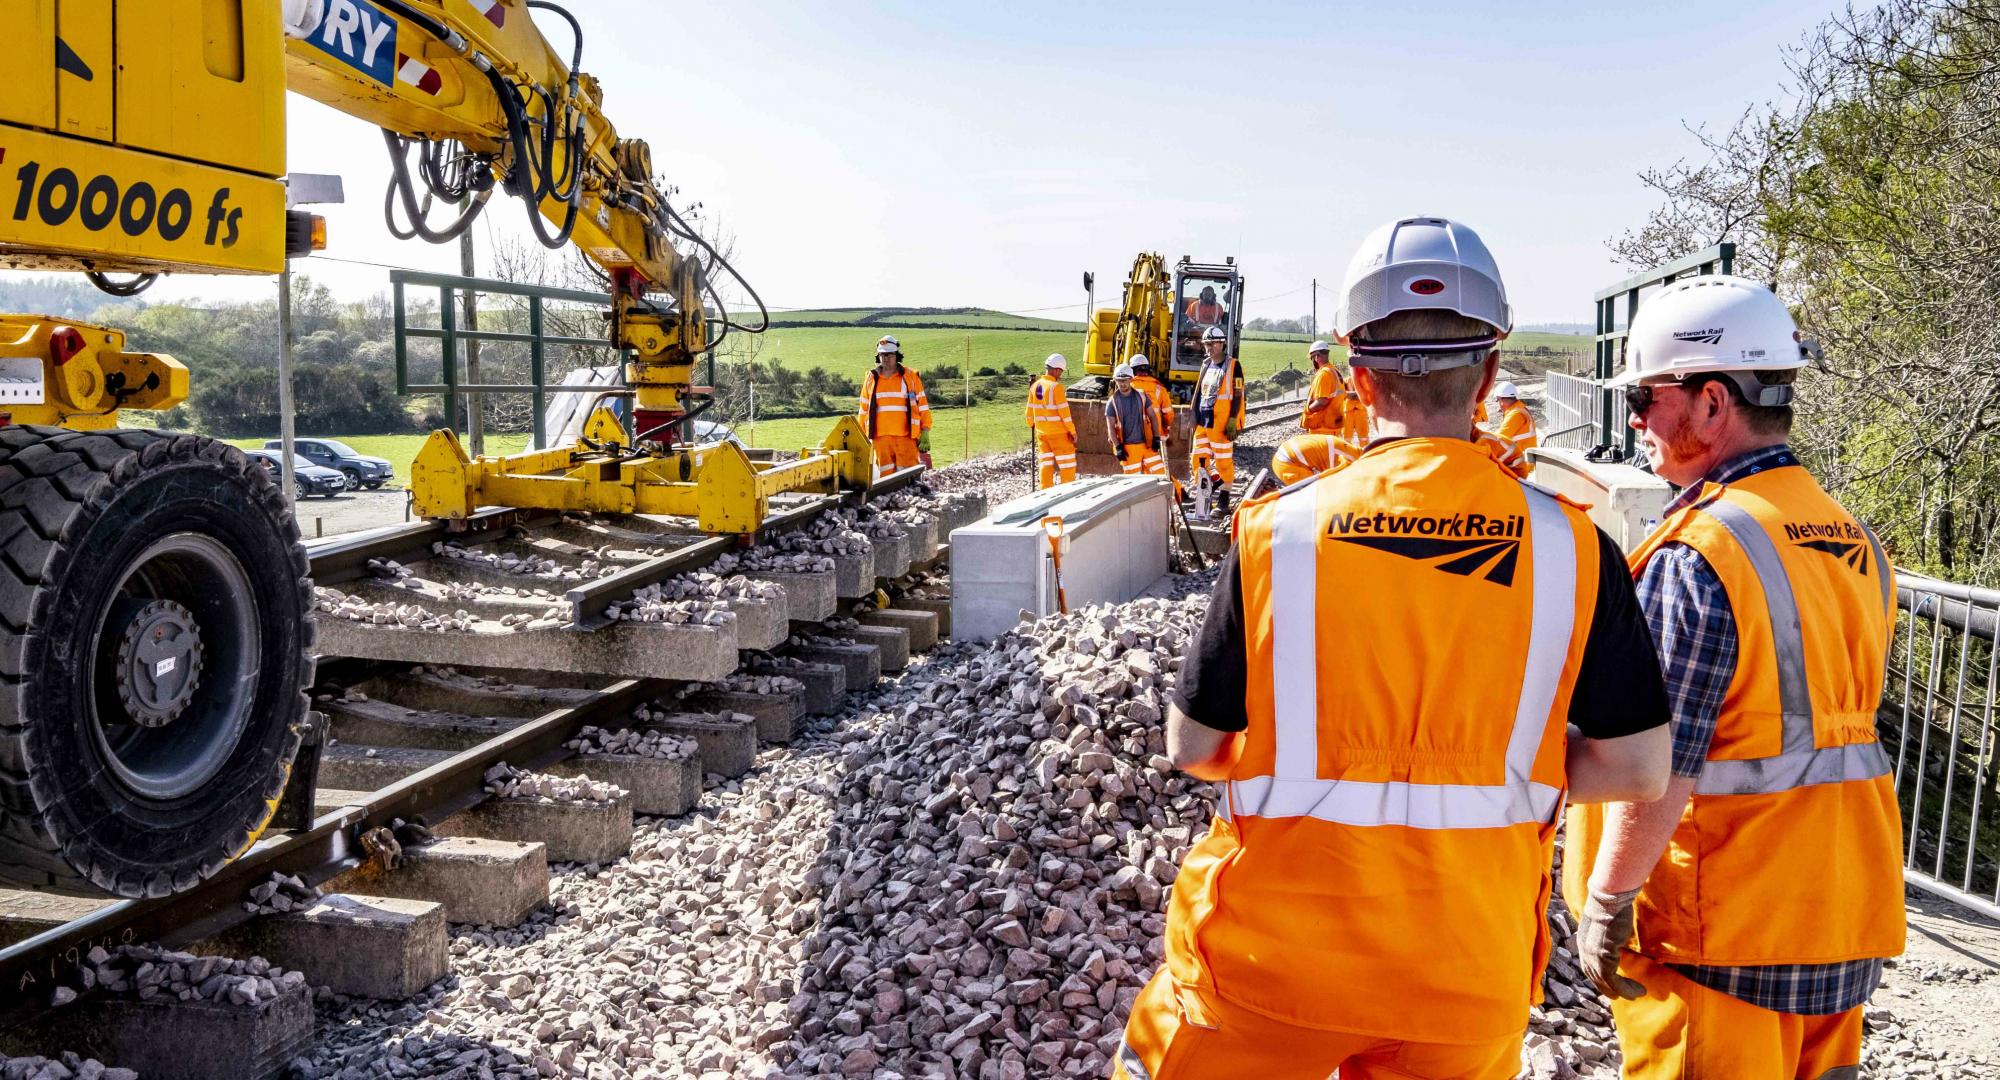 Engineers working on track, via Network Rail 